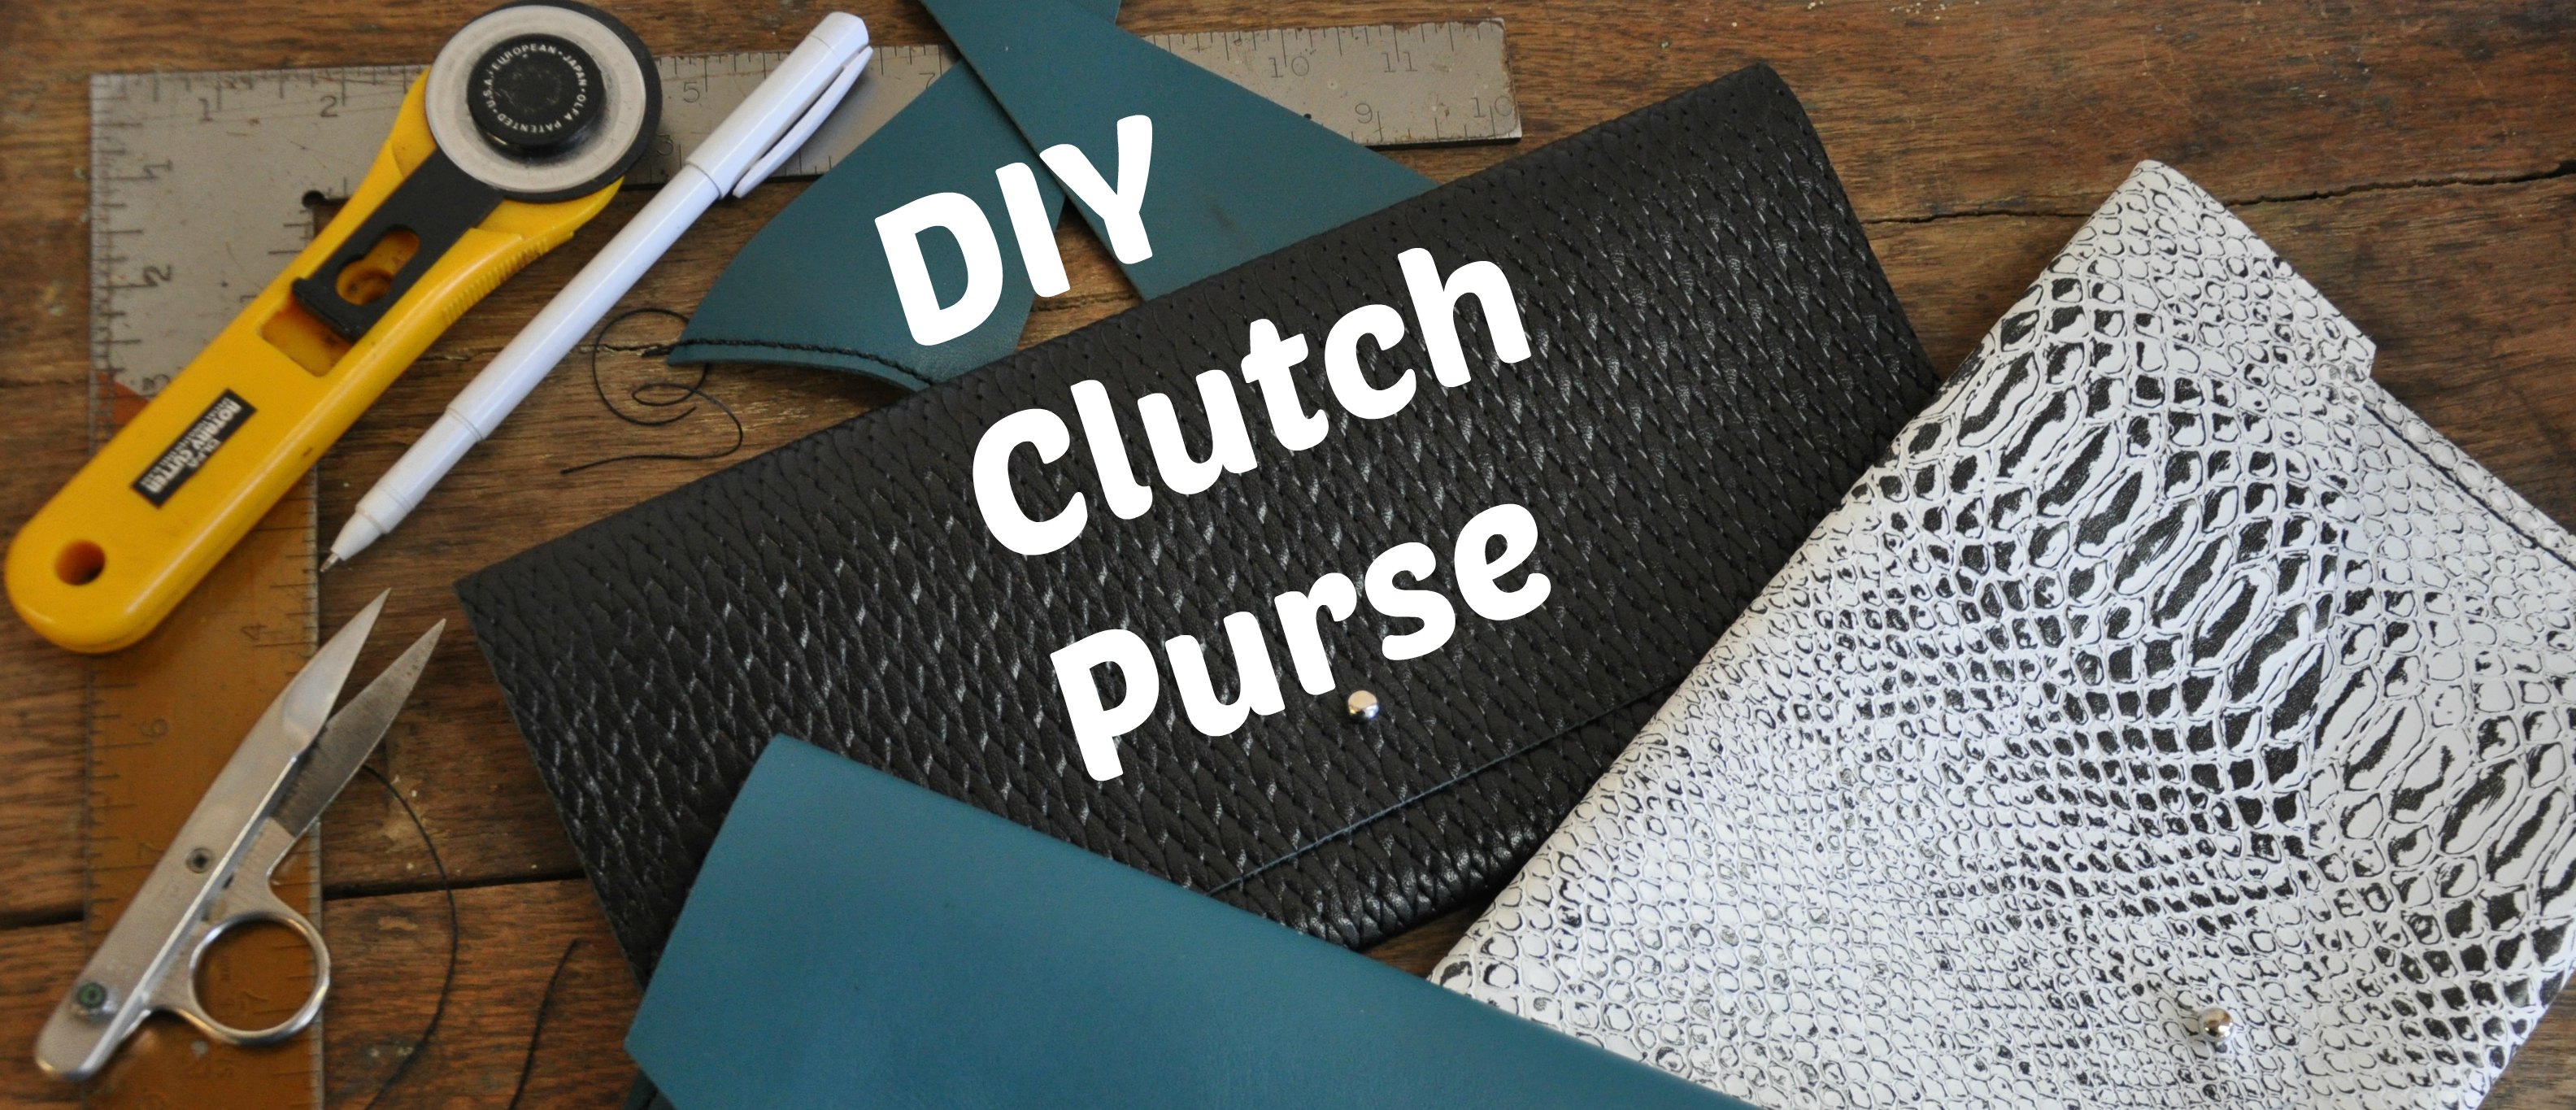 Clutch Bag Tutorial and Pattern ~ DIY Tutorial Ideas!